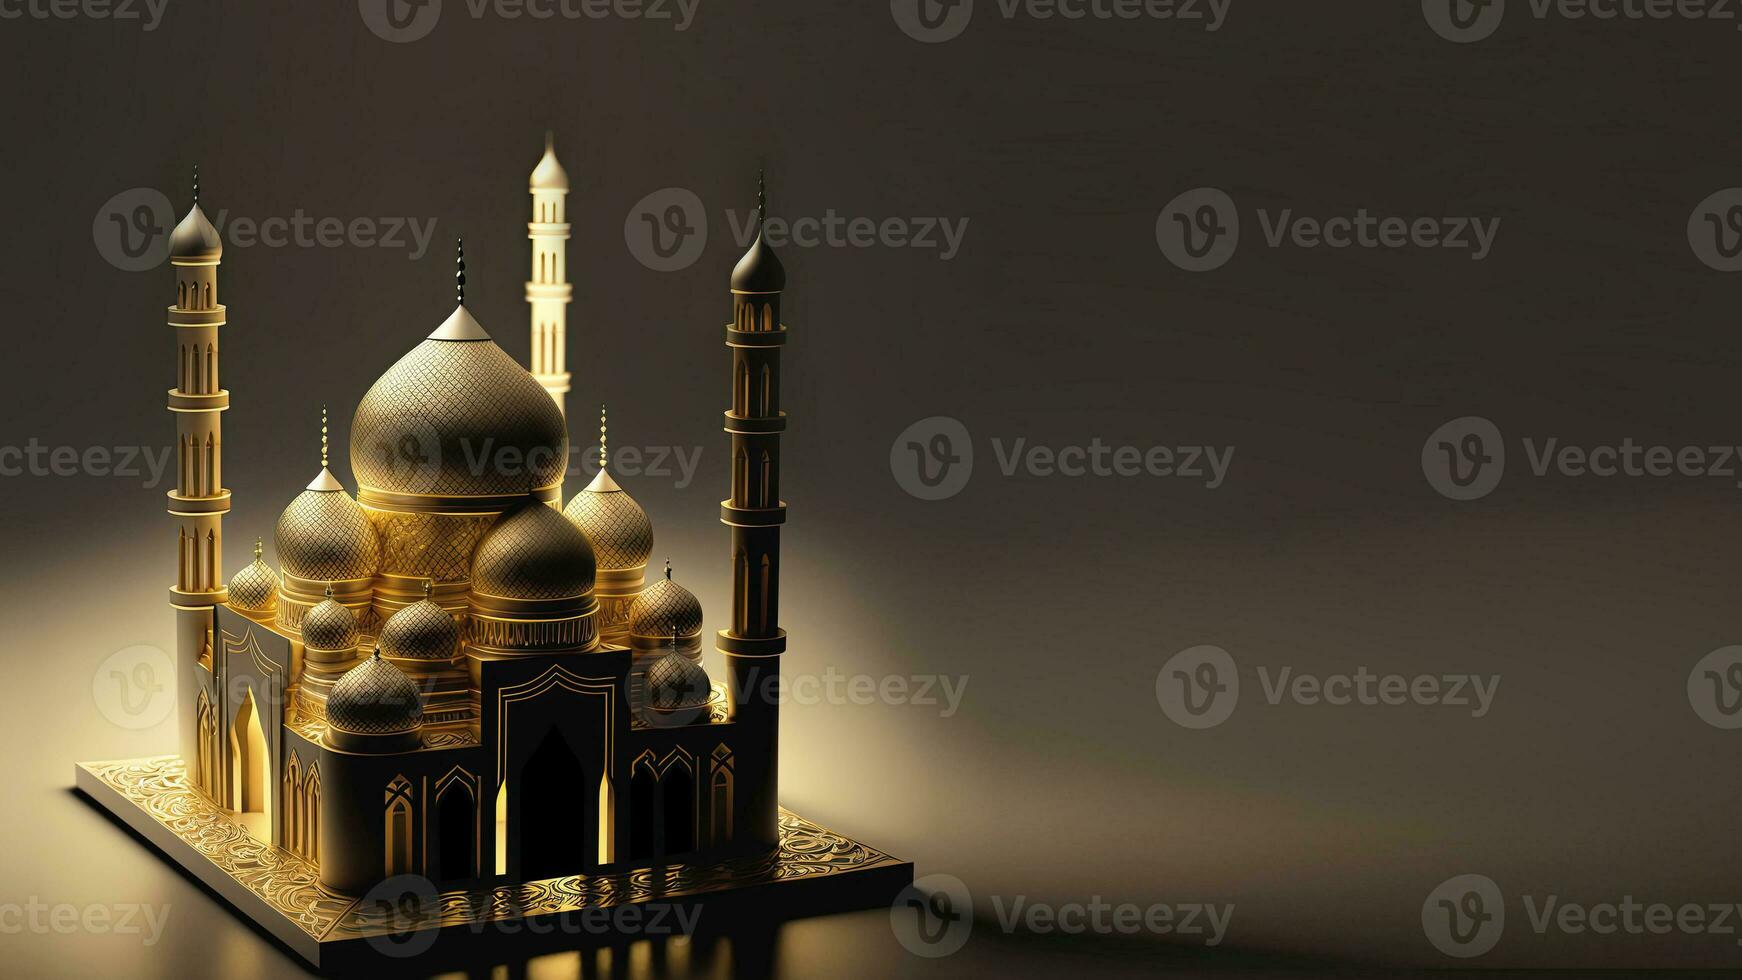 3D Illustration Of Golden Exquisite Mosque On Dark Background. Islamic Religious Concept. photo